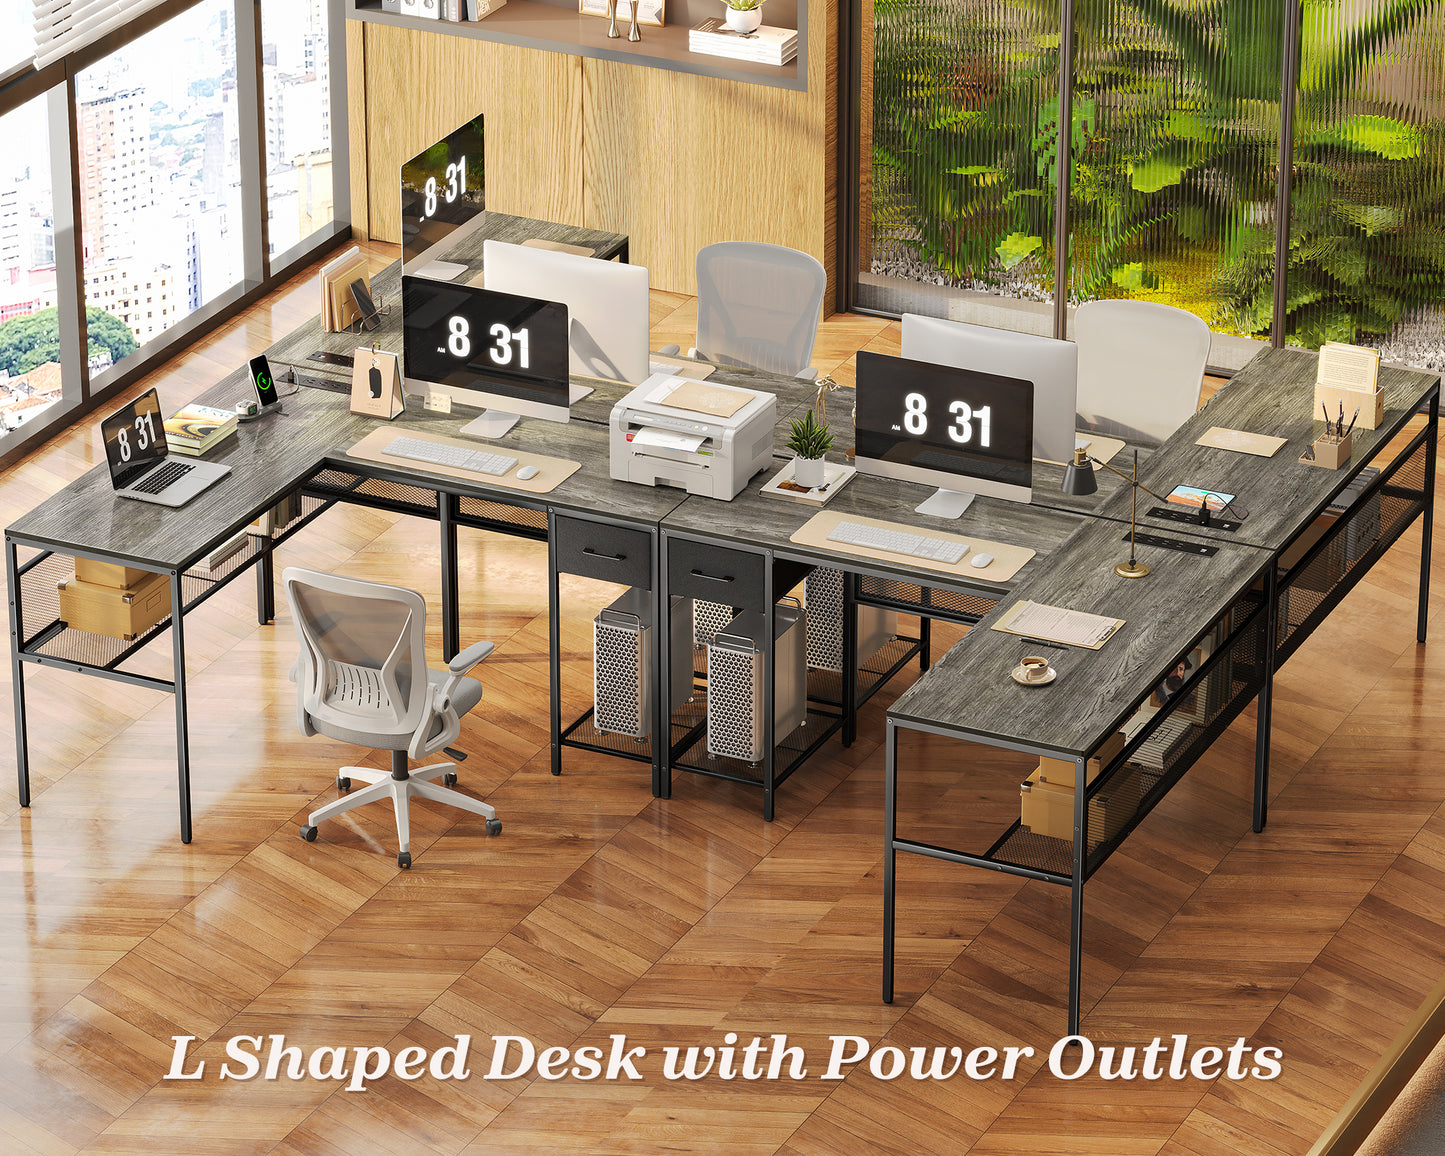 SUPERJARE L Shaped Desk with Power Outlets, Computer Desk with Drawer, Reversible Corner Desk with Grid Storage Bookshelf, Home Office Desk, Gray